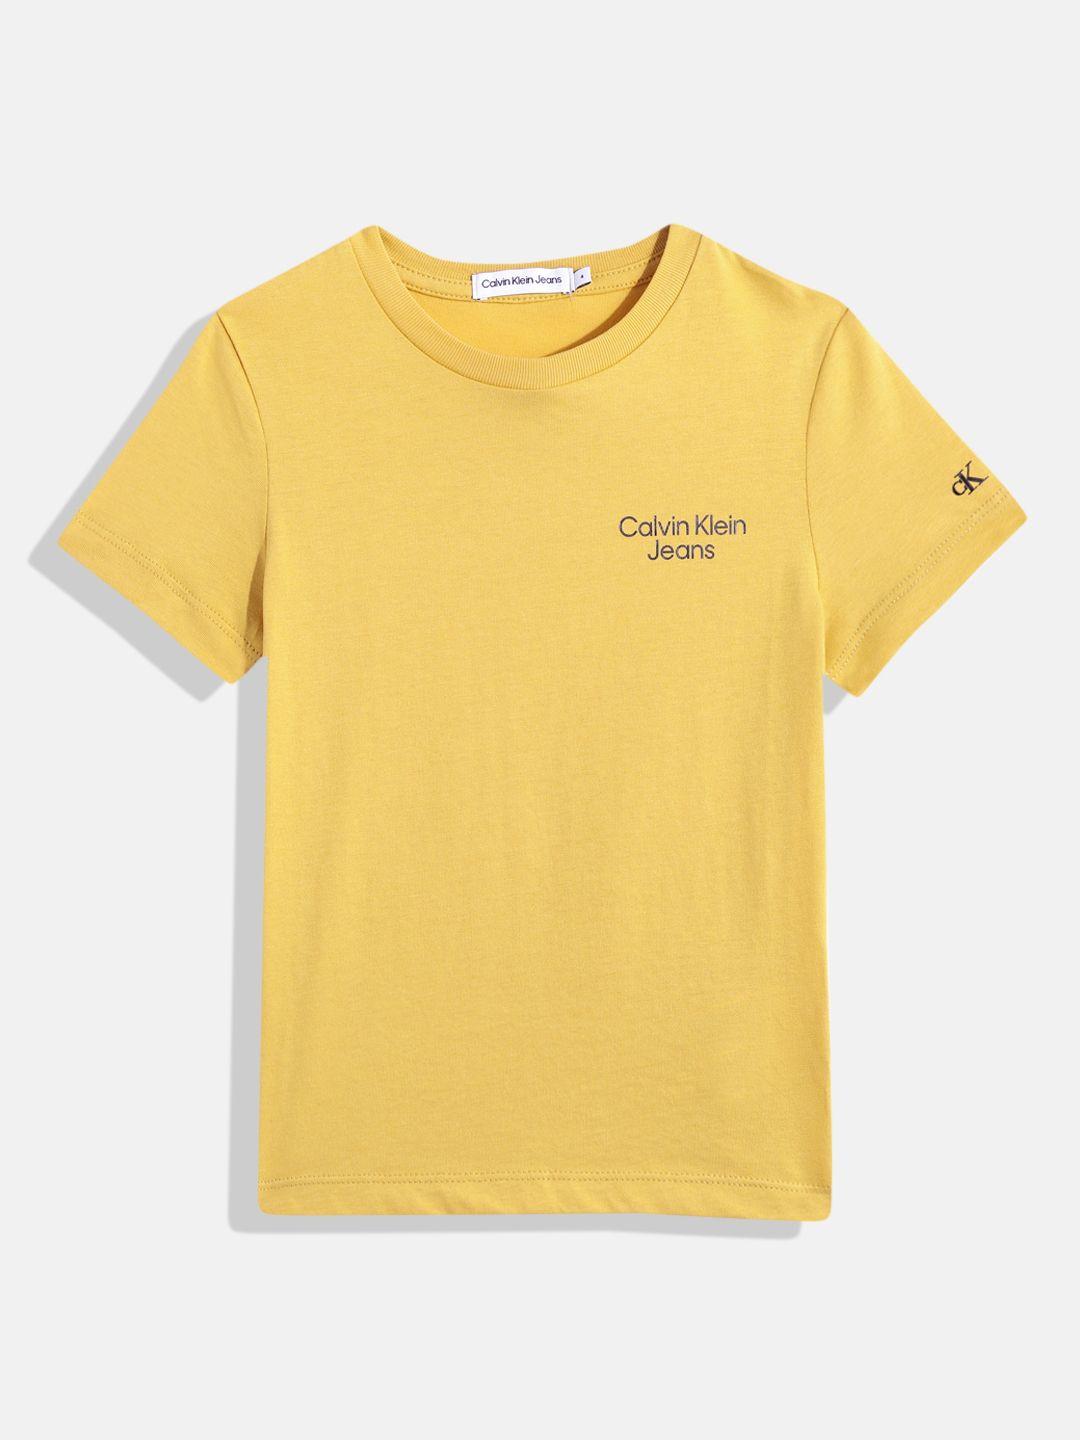 calvin klein boys brand logo printed pure cotton t-shirt